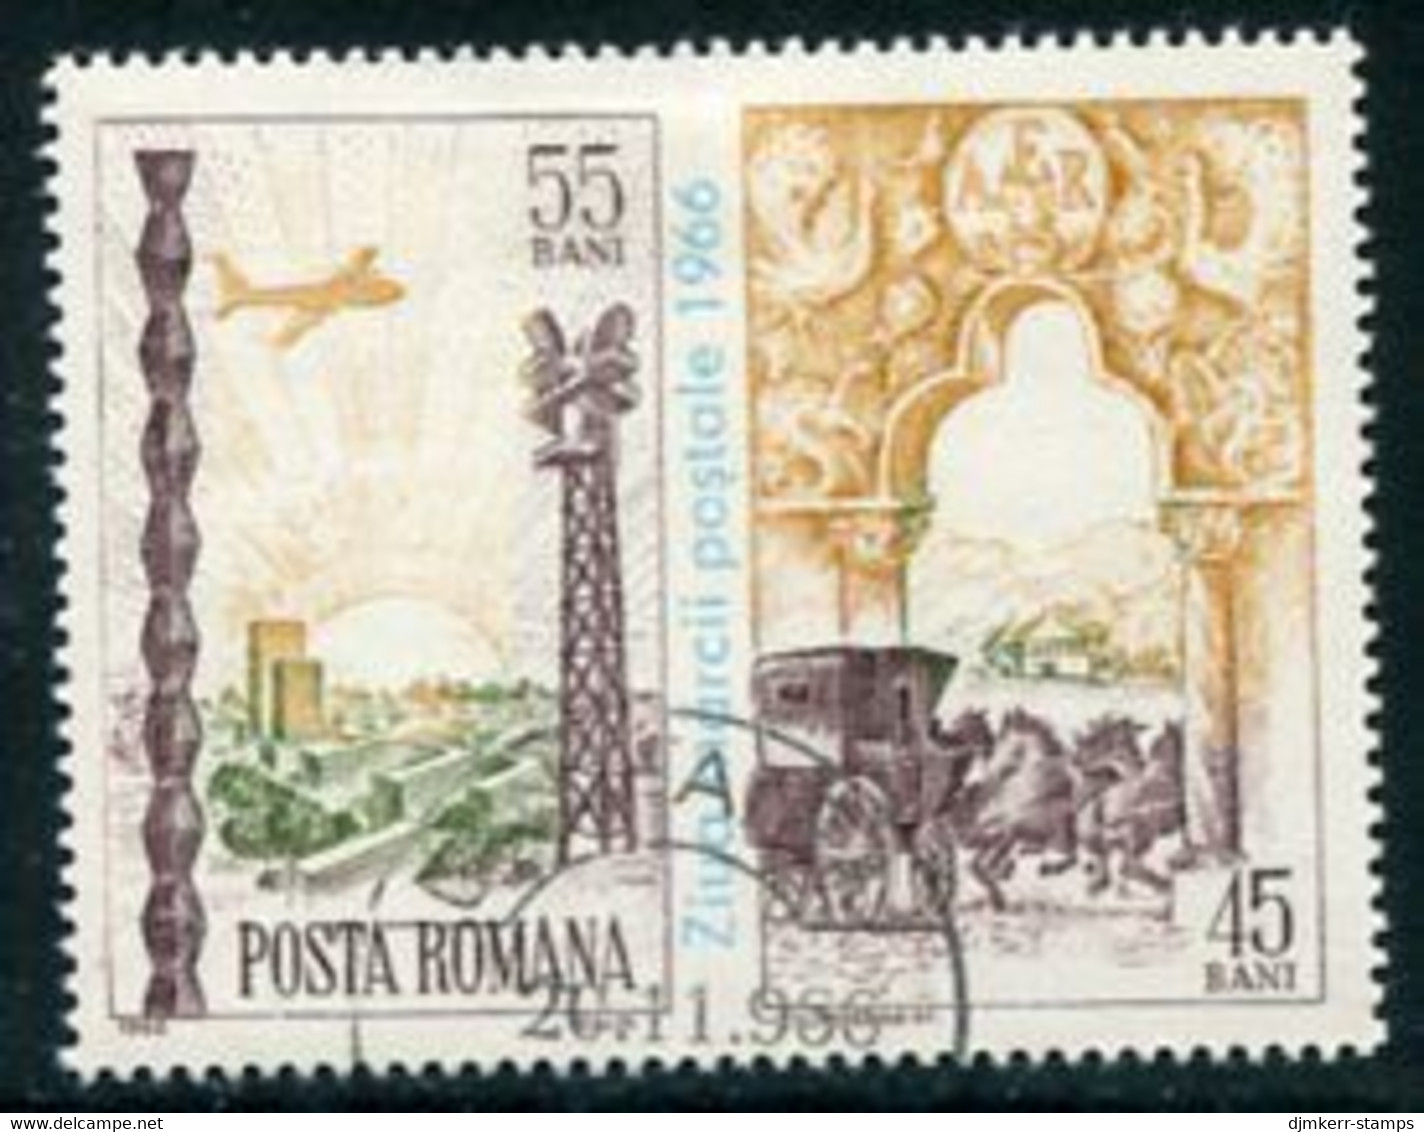 ROMANIA 1966 Stamp Day Used.  Michel 2552 - Gebruikt